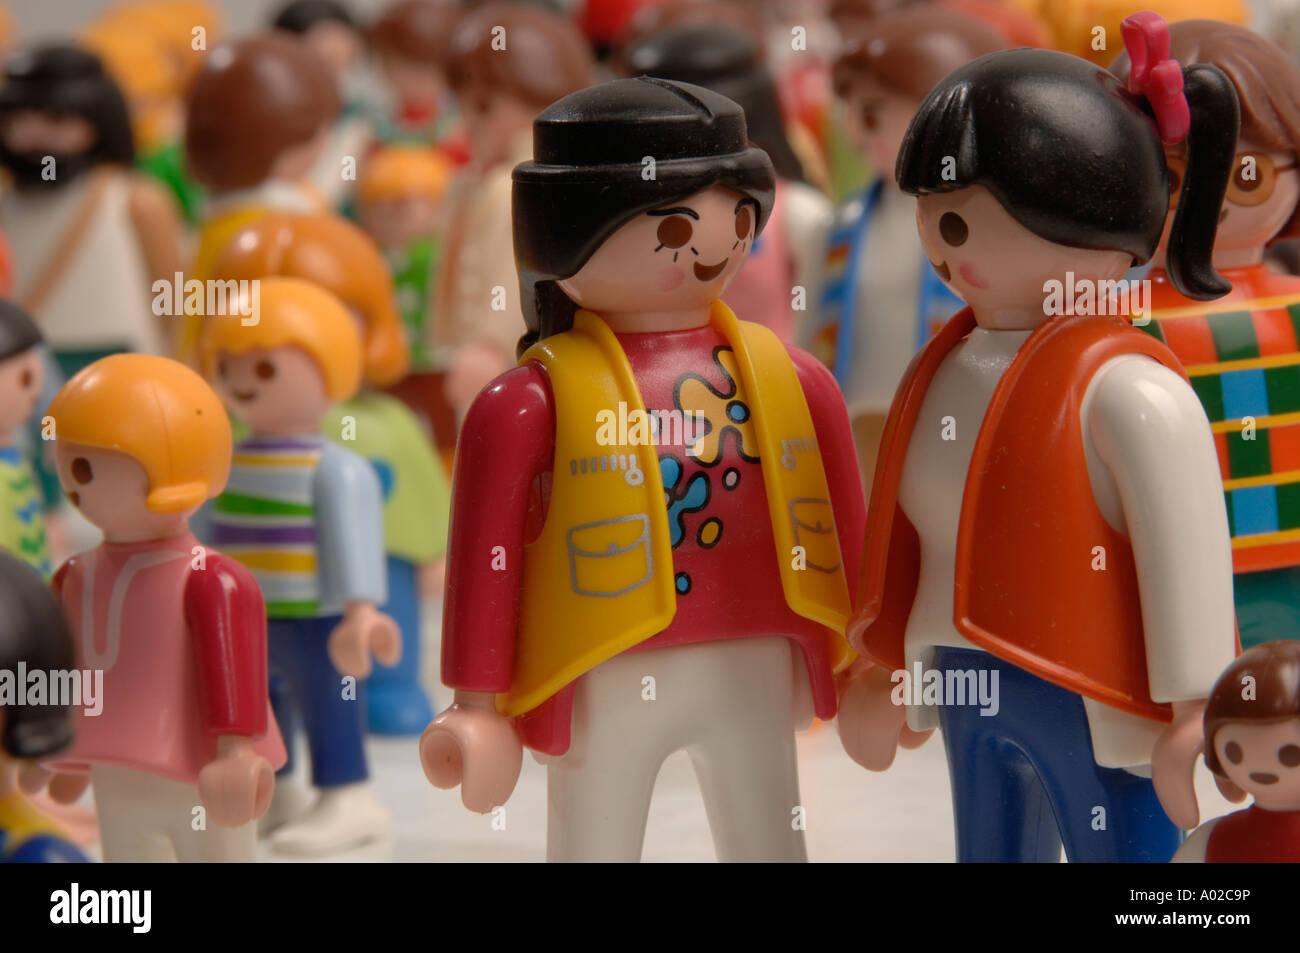 Playmobil tiny plastic people Stock Photo - Alamy